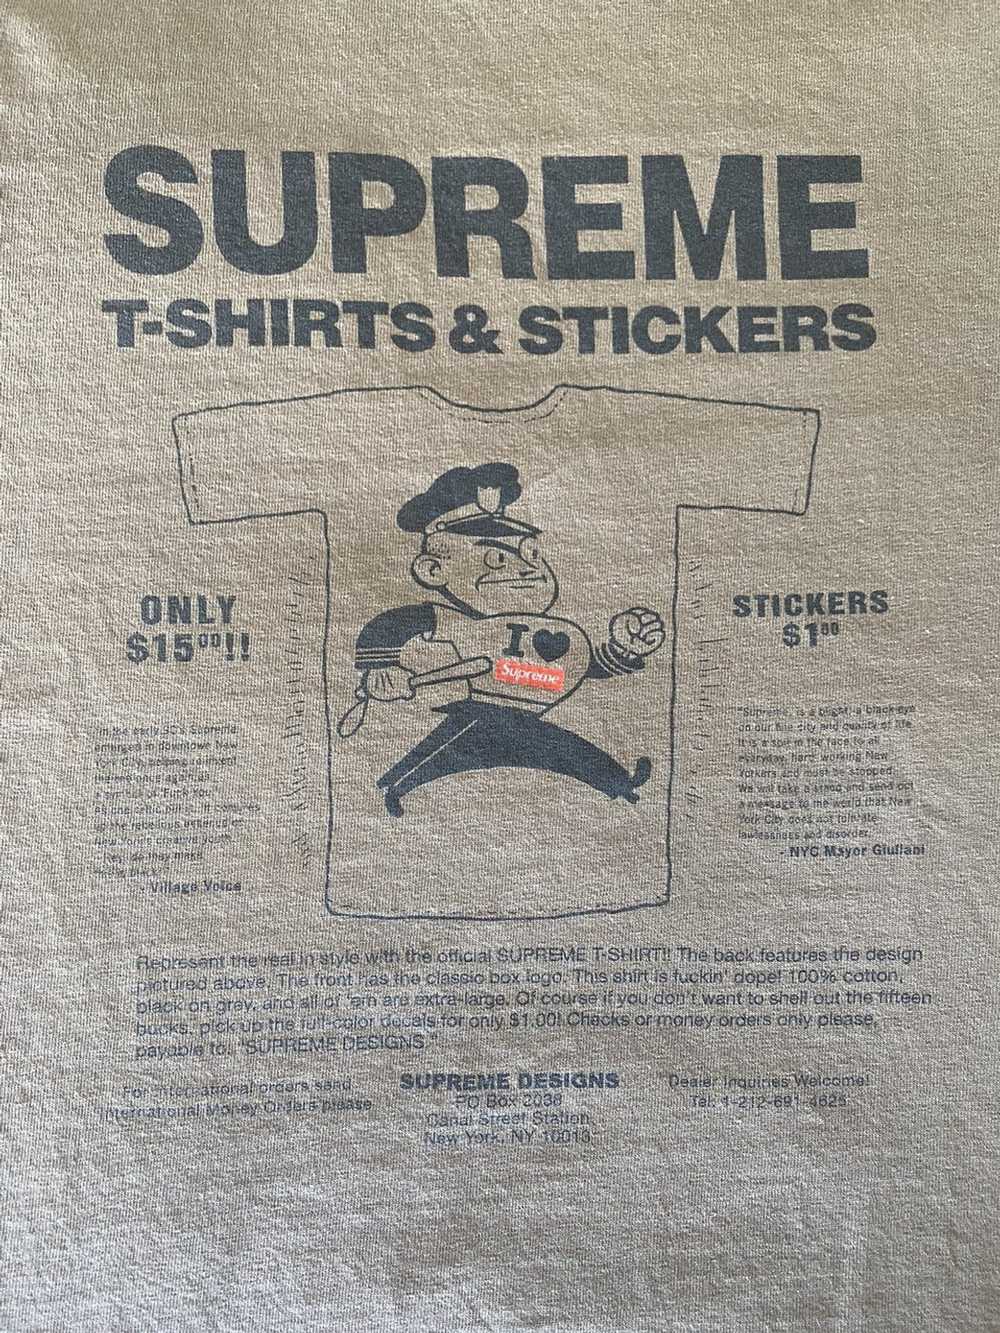 Supreme Supreme T Shirts and Stickers Tee - image 4